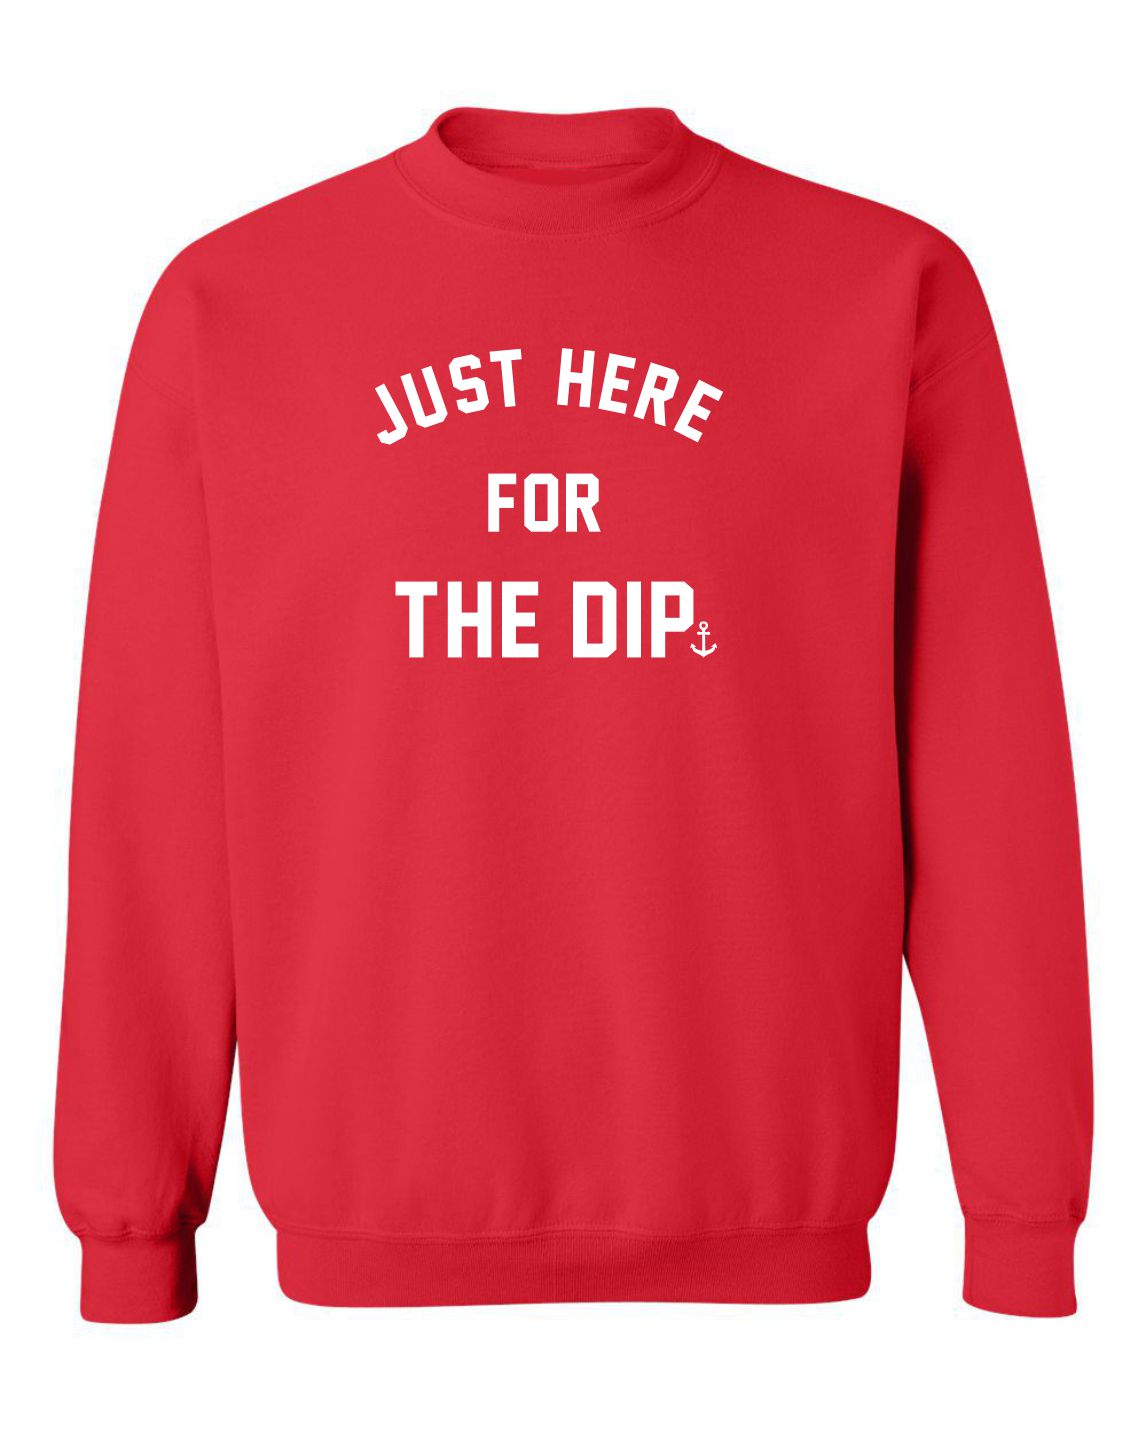 "Just Here For The Dip" Unisex Crewneck Sweatshirt